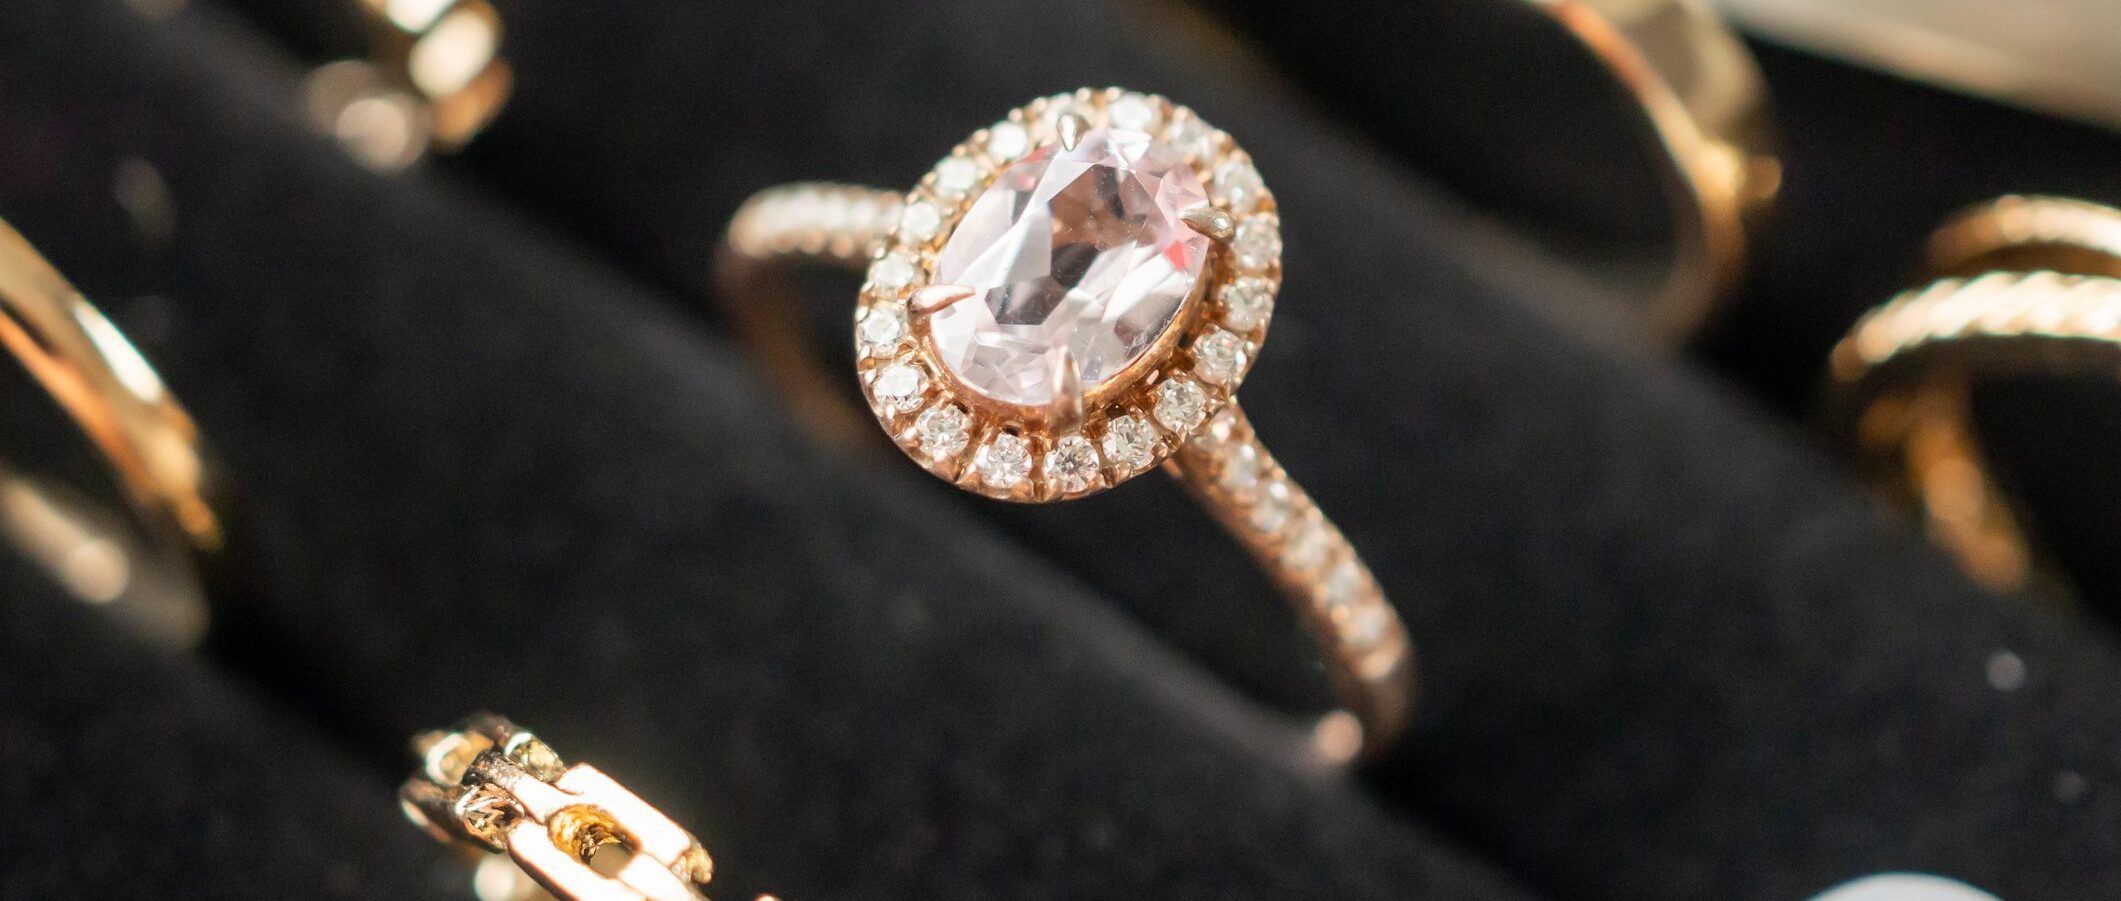 Display case of diamond ring.